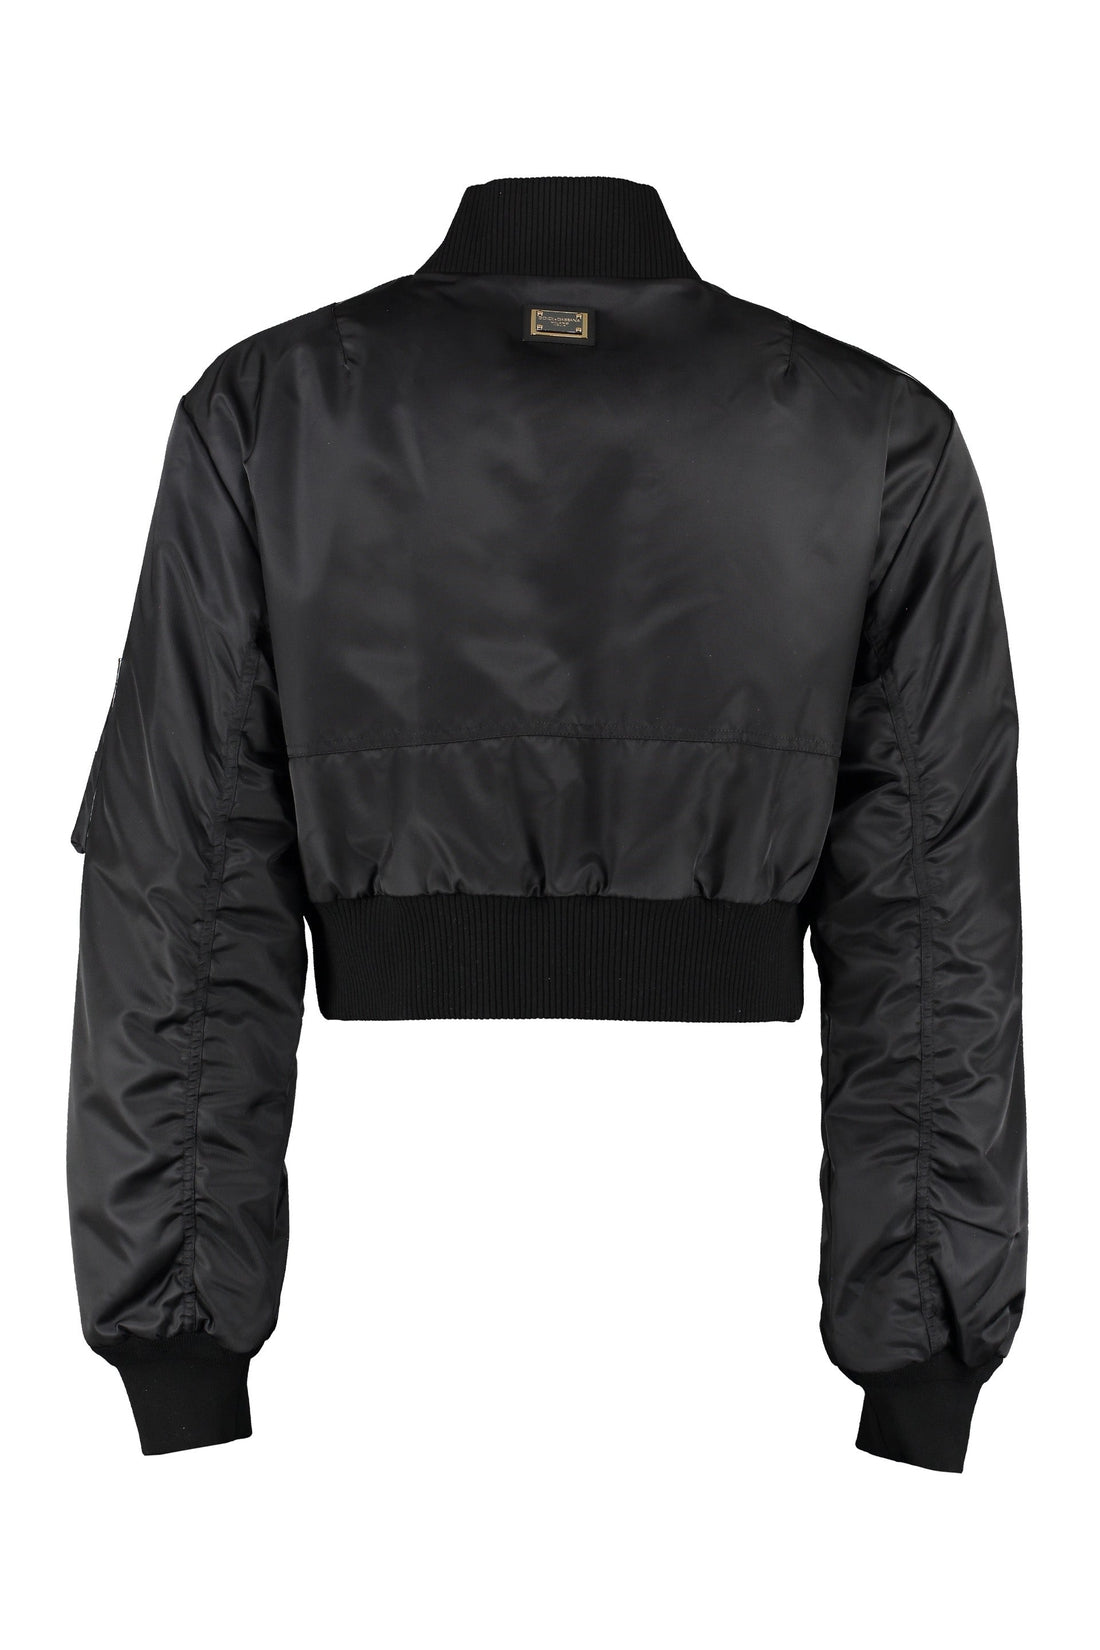 Dolce & Gabbana-OUTLET-SALE-Nylon bomber jacket-ARCHIVIST